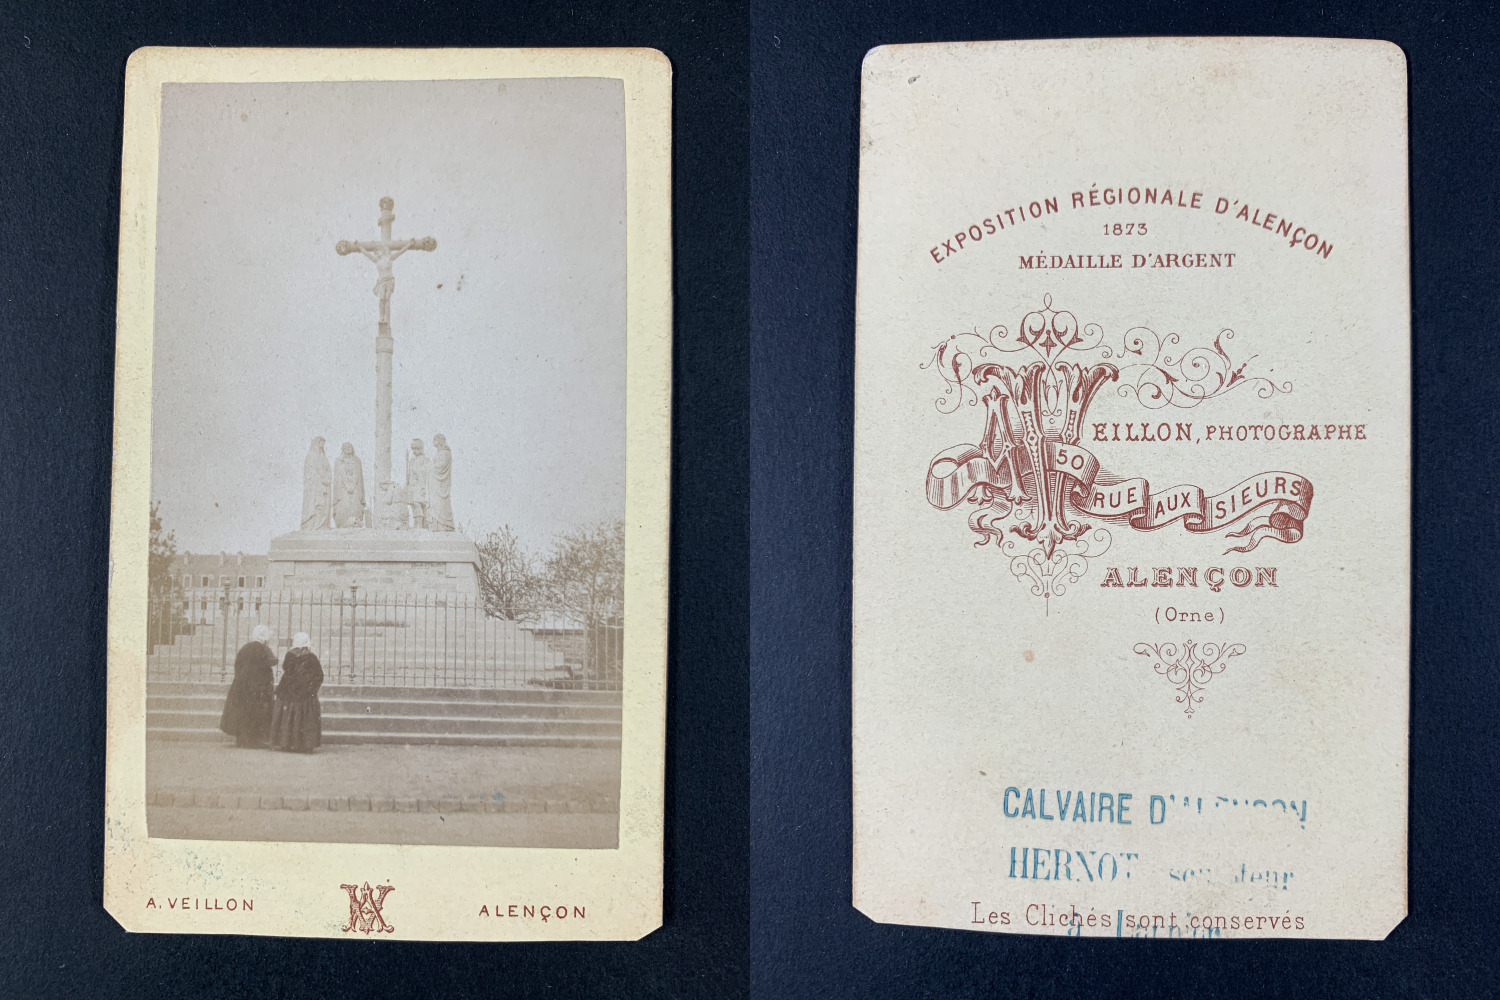 Veillon, France, Alençon, Calvaire vintage cdv albumen print CDV, album print